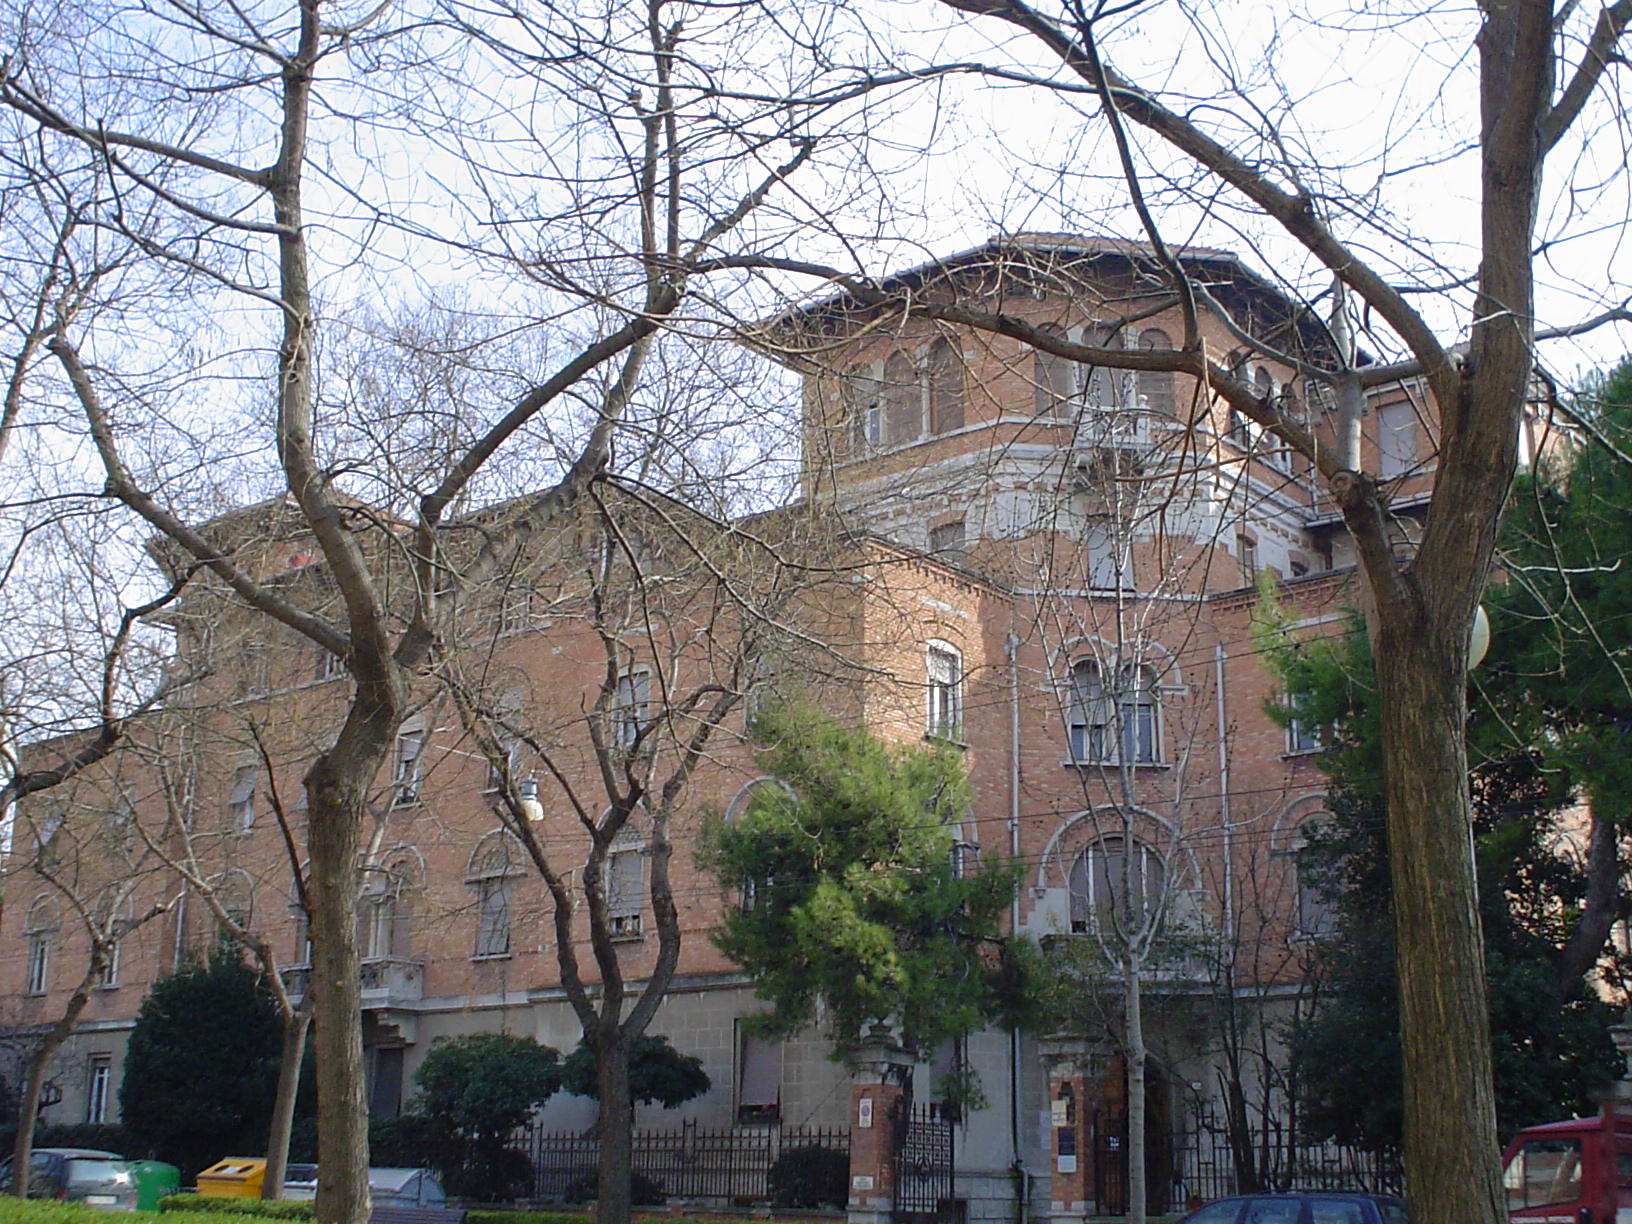 Palazzo in stile neoromanico (palazzo) - Ancona (AN) 